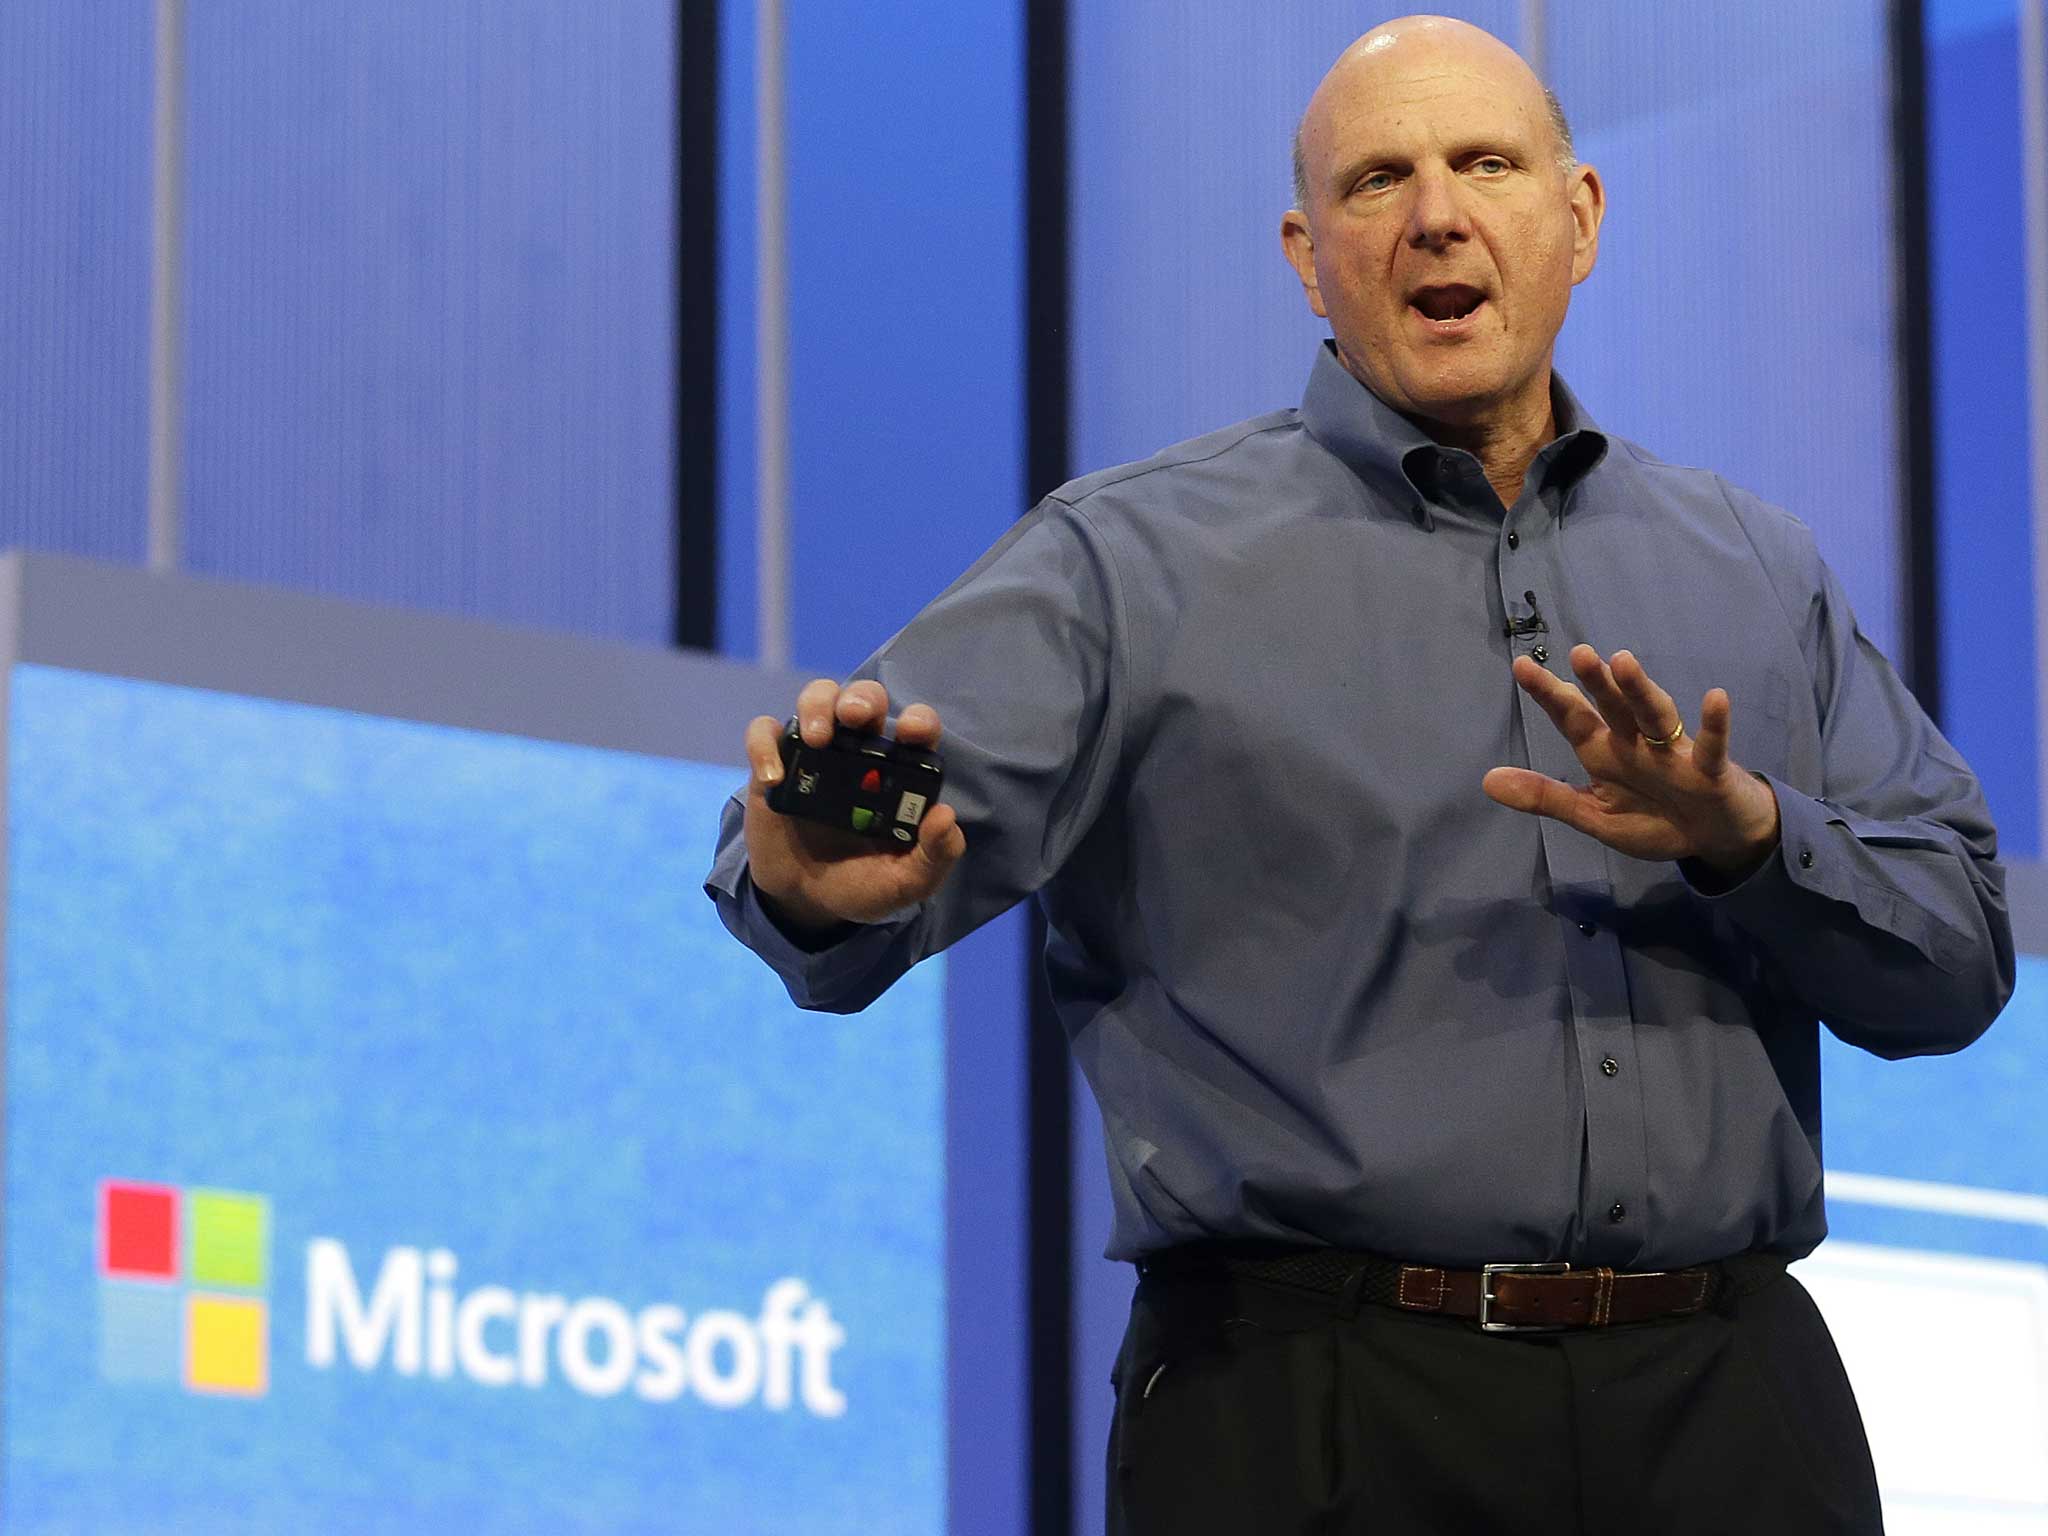 Microsoft CEO Steve Ballmer unveils Windows 8.1